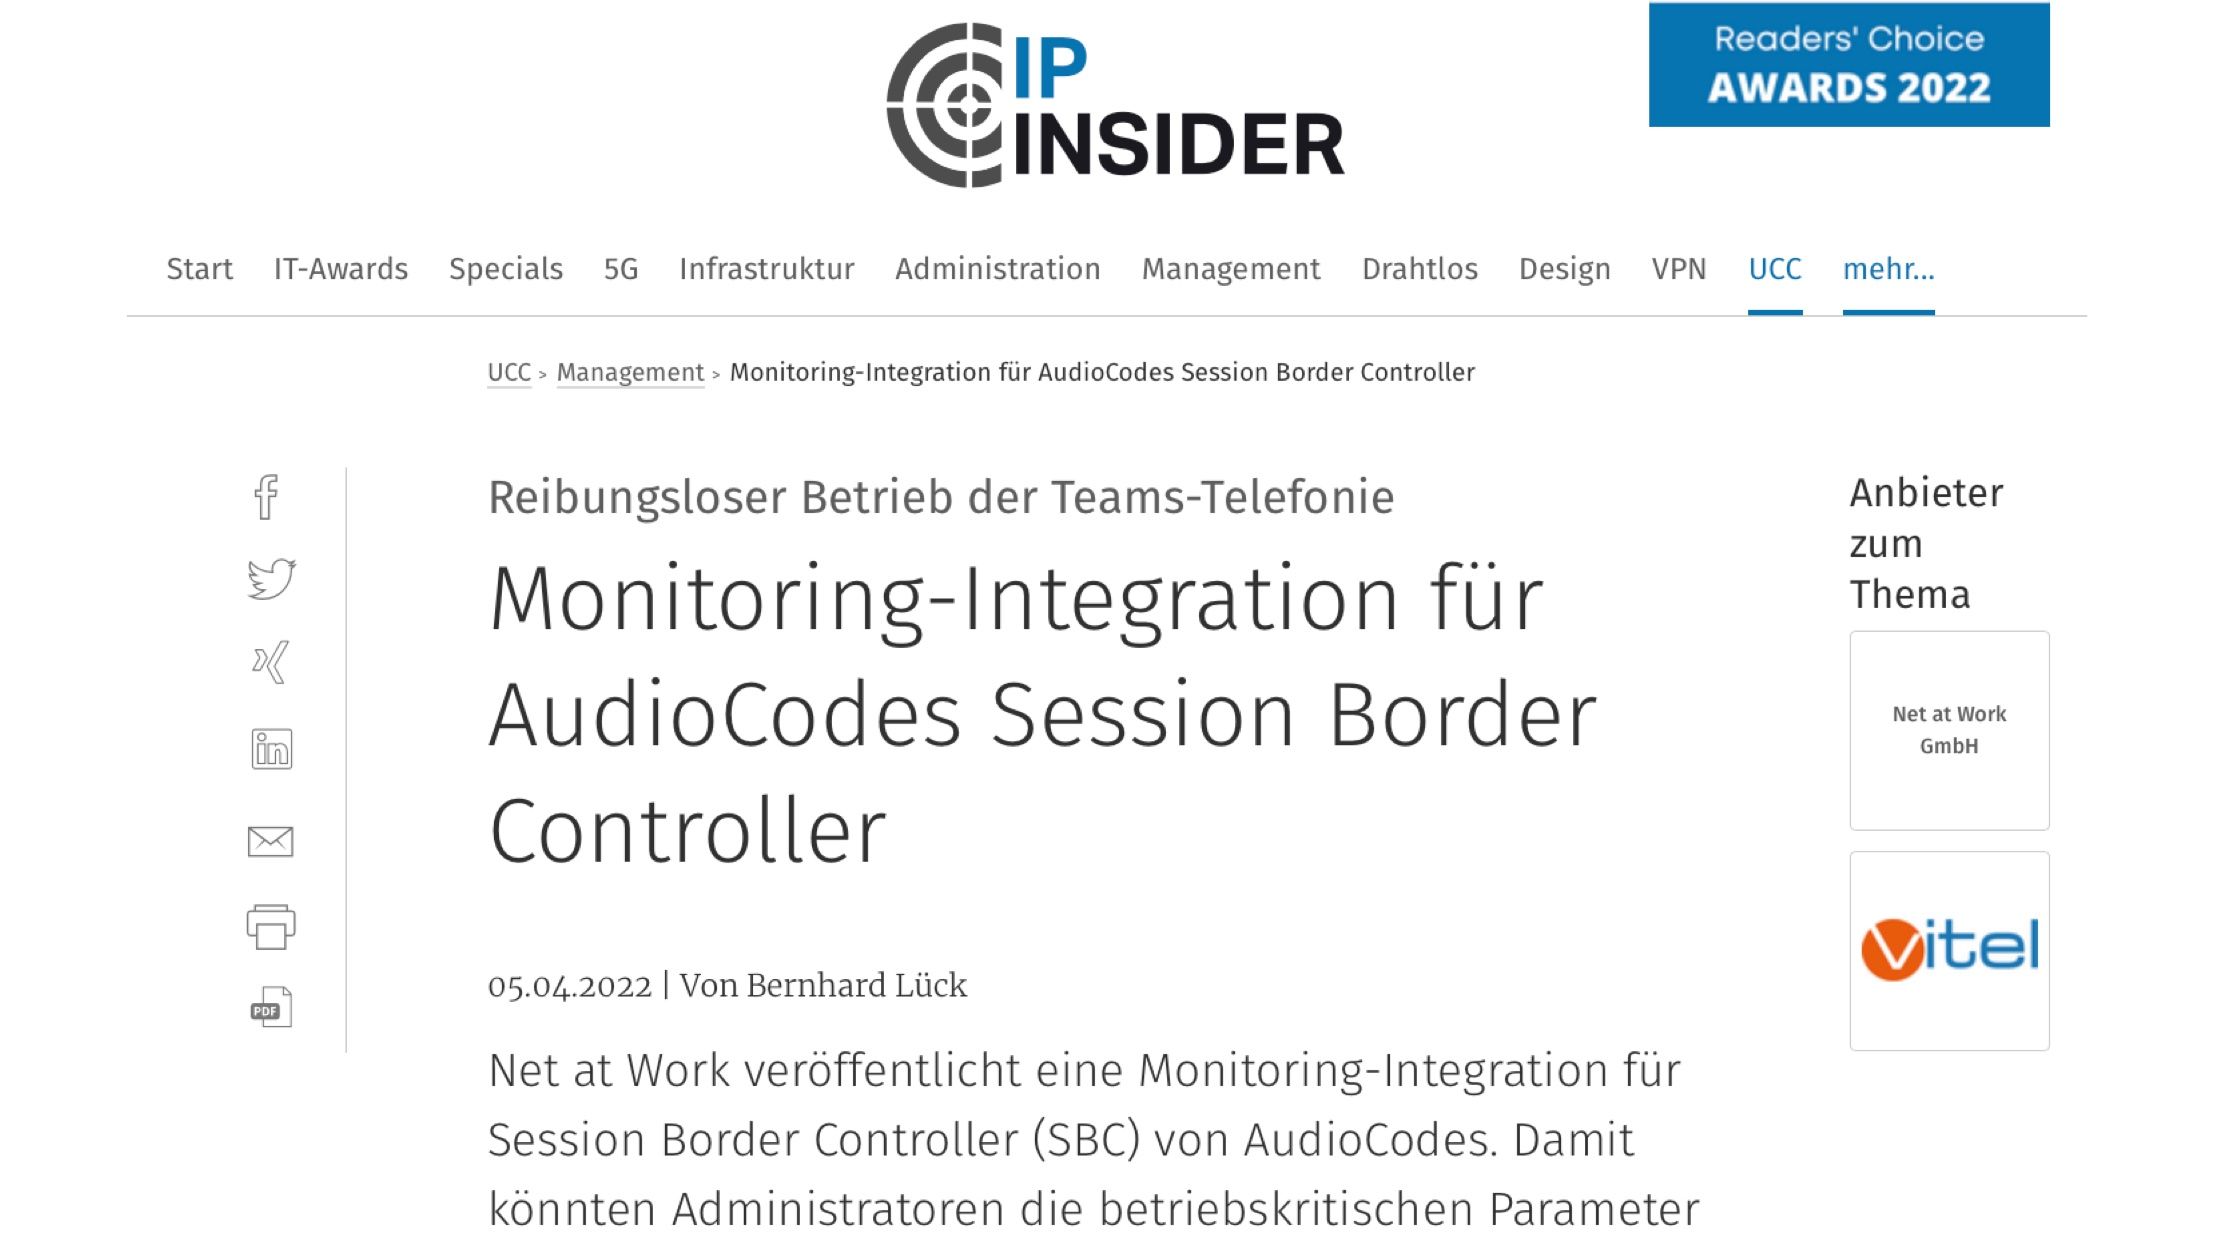 Artikel "Monitoring-Integration für AudioCodes Session Border Controller" im IP Insider